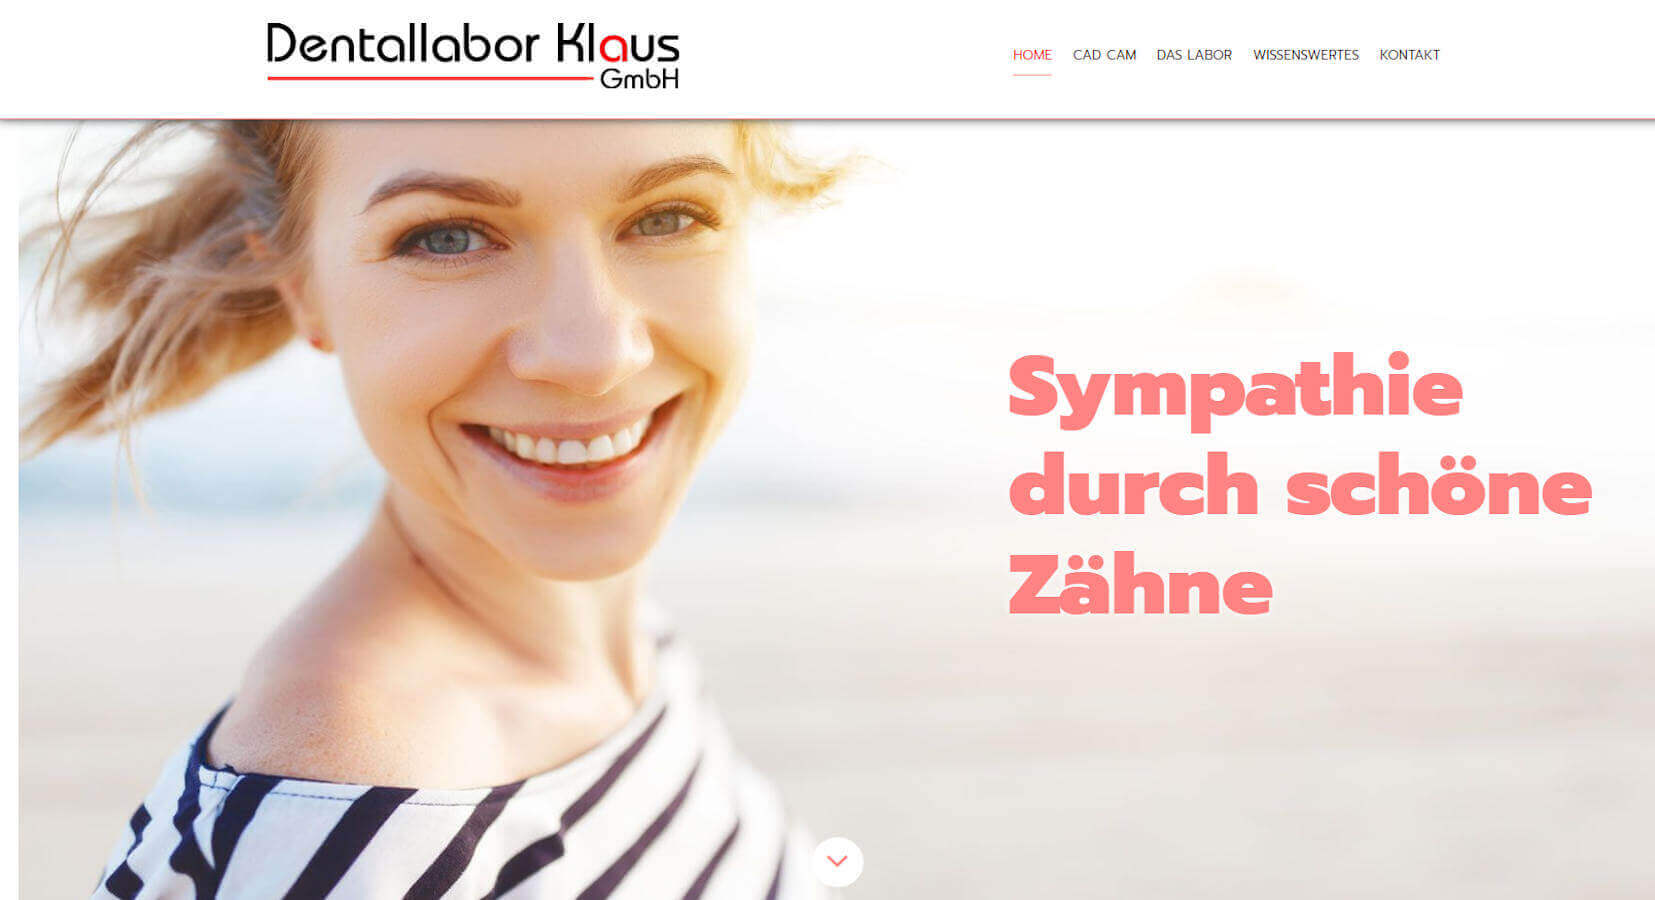 Dentallabor Klaus GmbH